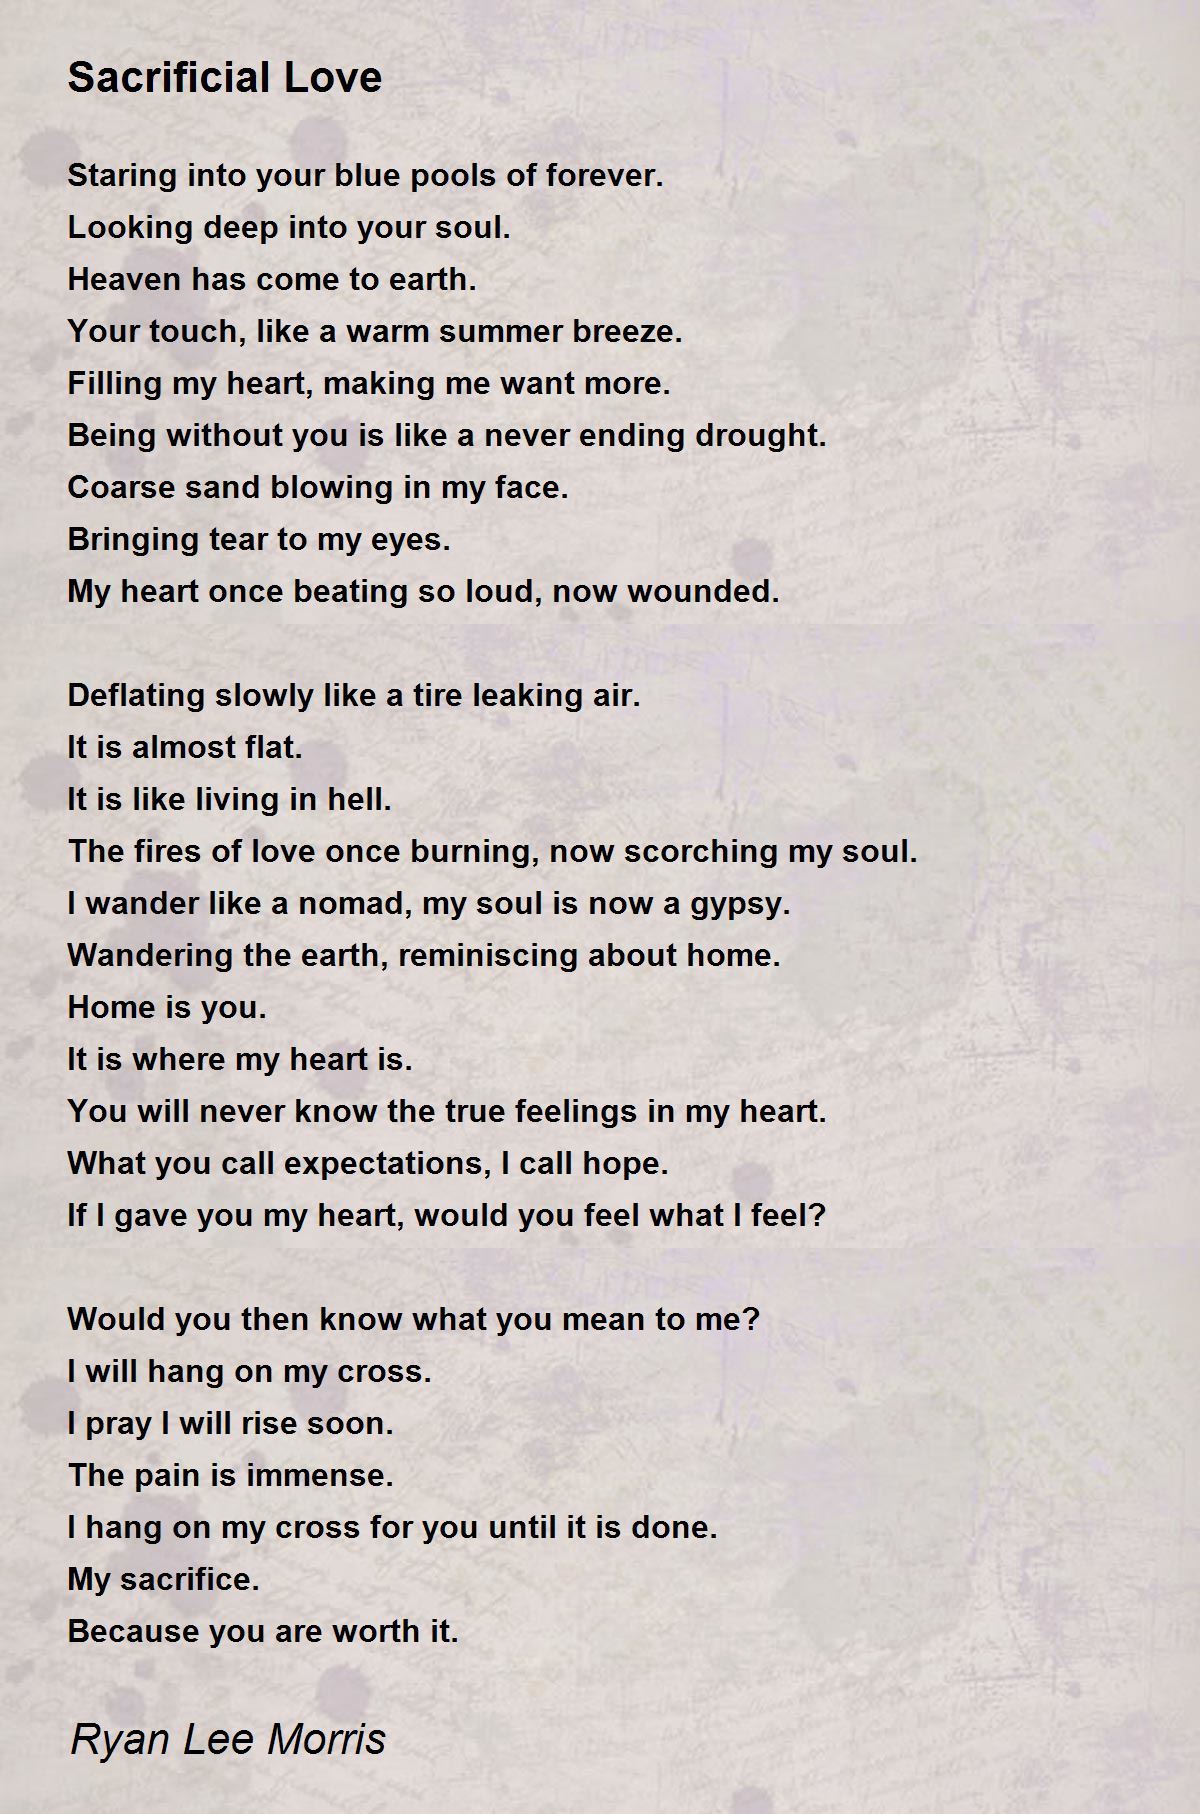 Sacrificial Love - Sacrificial Love Poem by Ryan Lee Morris